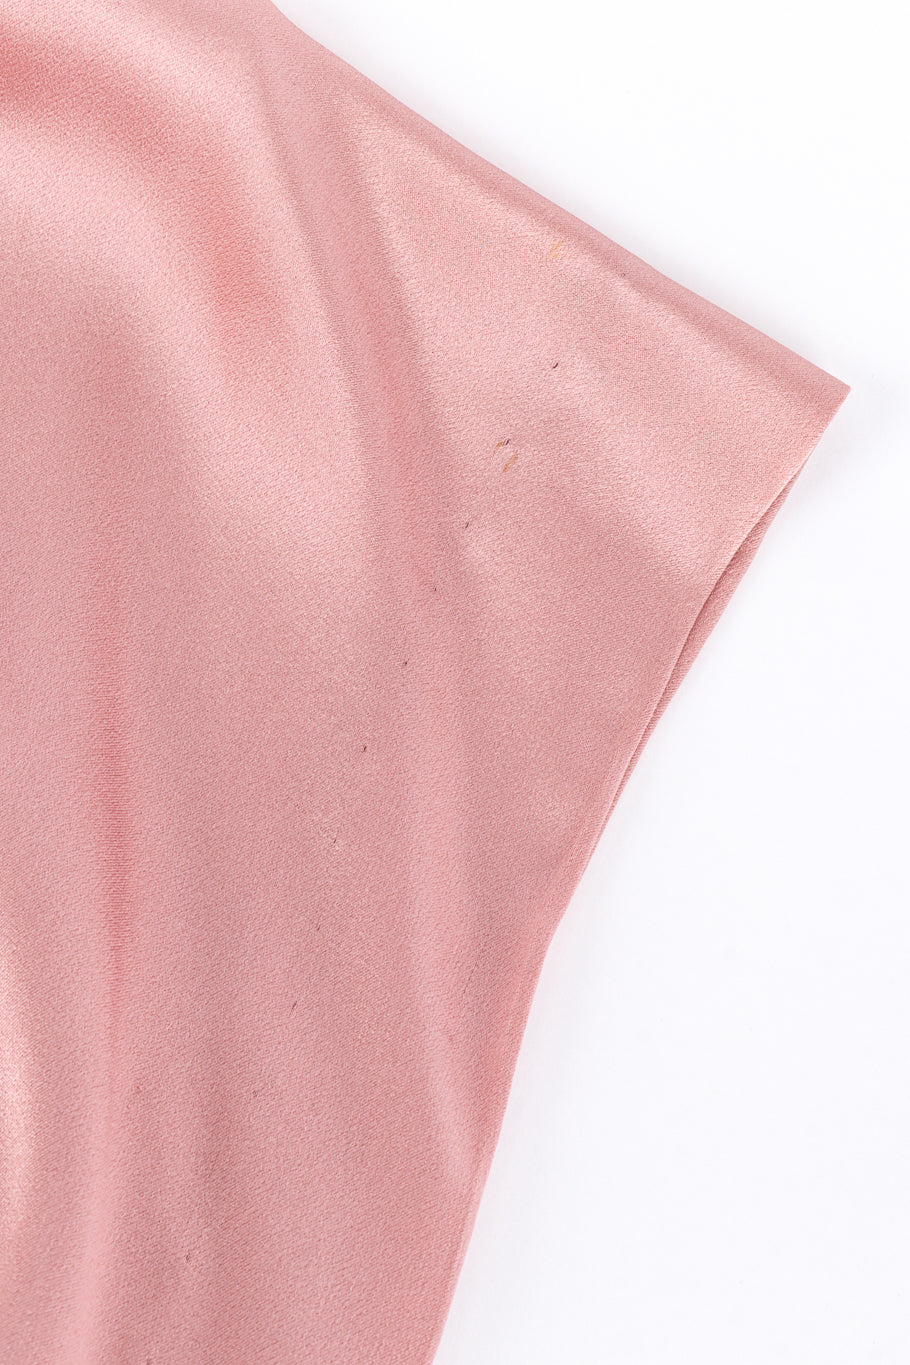 Vintage JAX Bias Silk Gown close up detail of damage to cowl sleeve @Recess LA